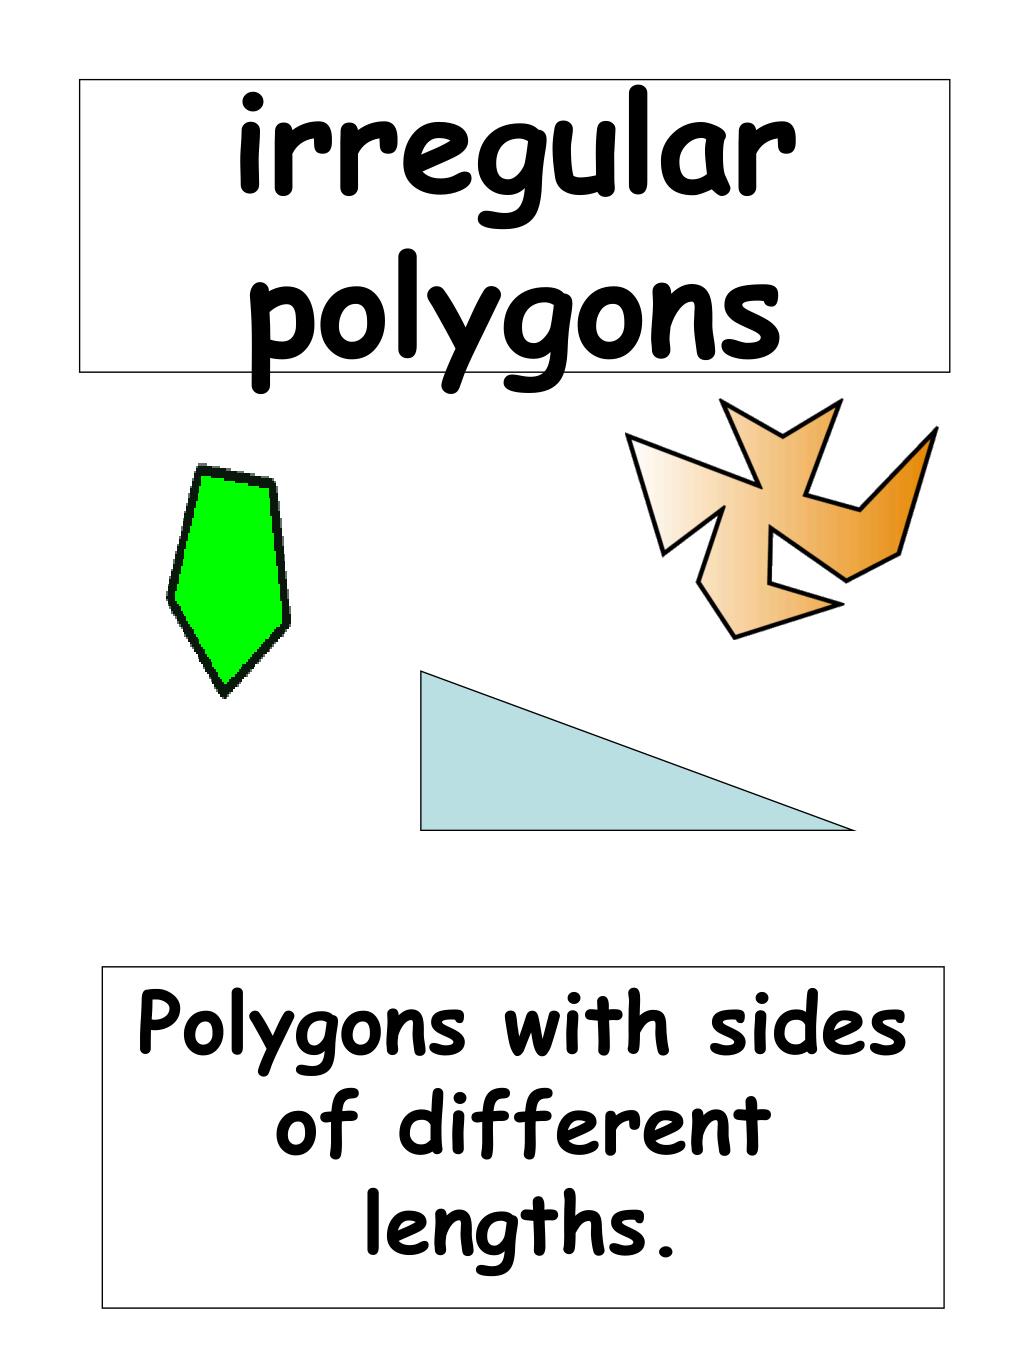 PPT - irregular polygons PowerPoint Presentation, free download - ID